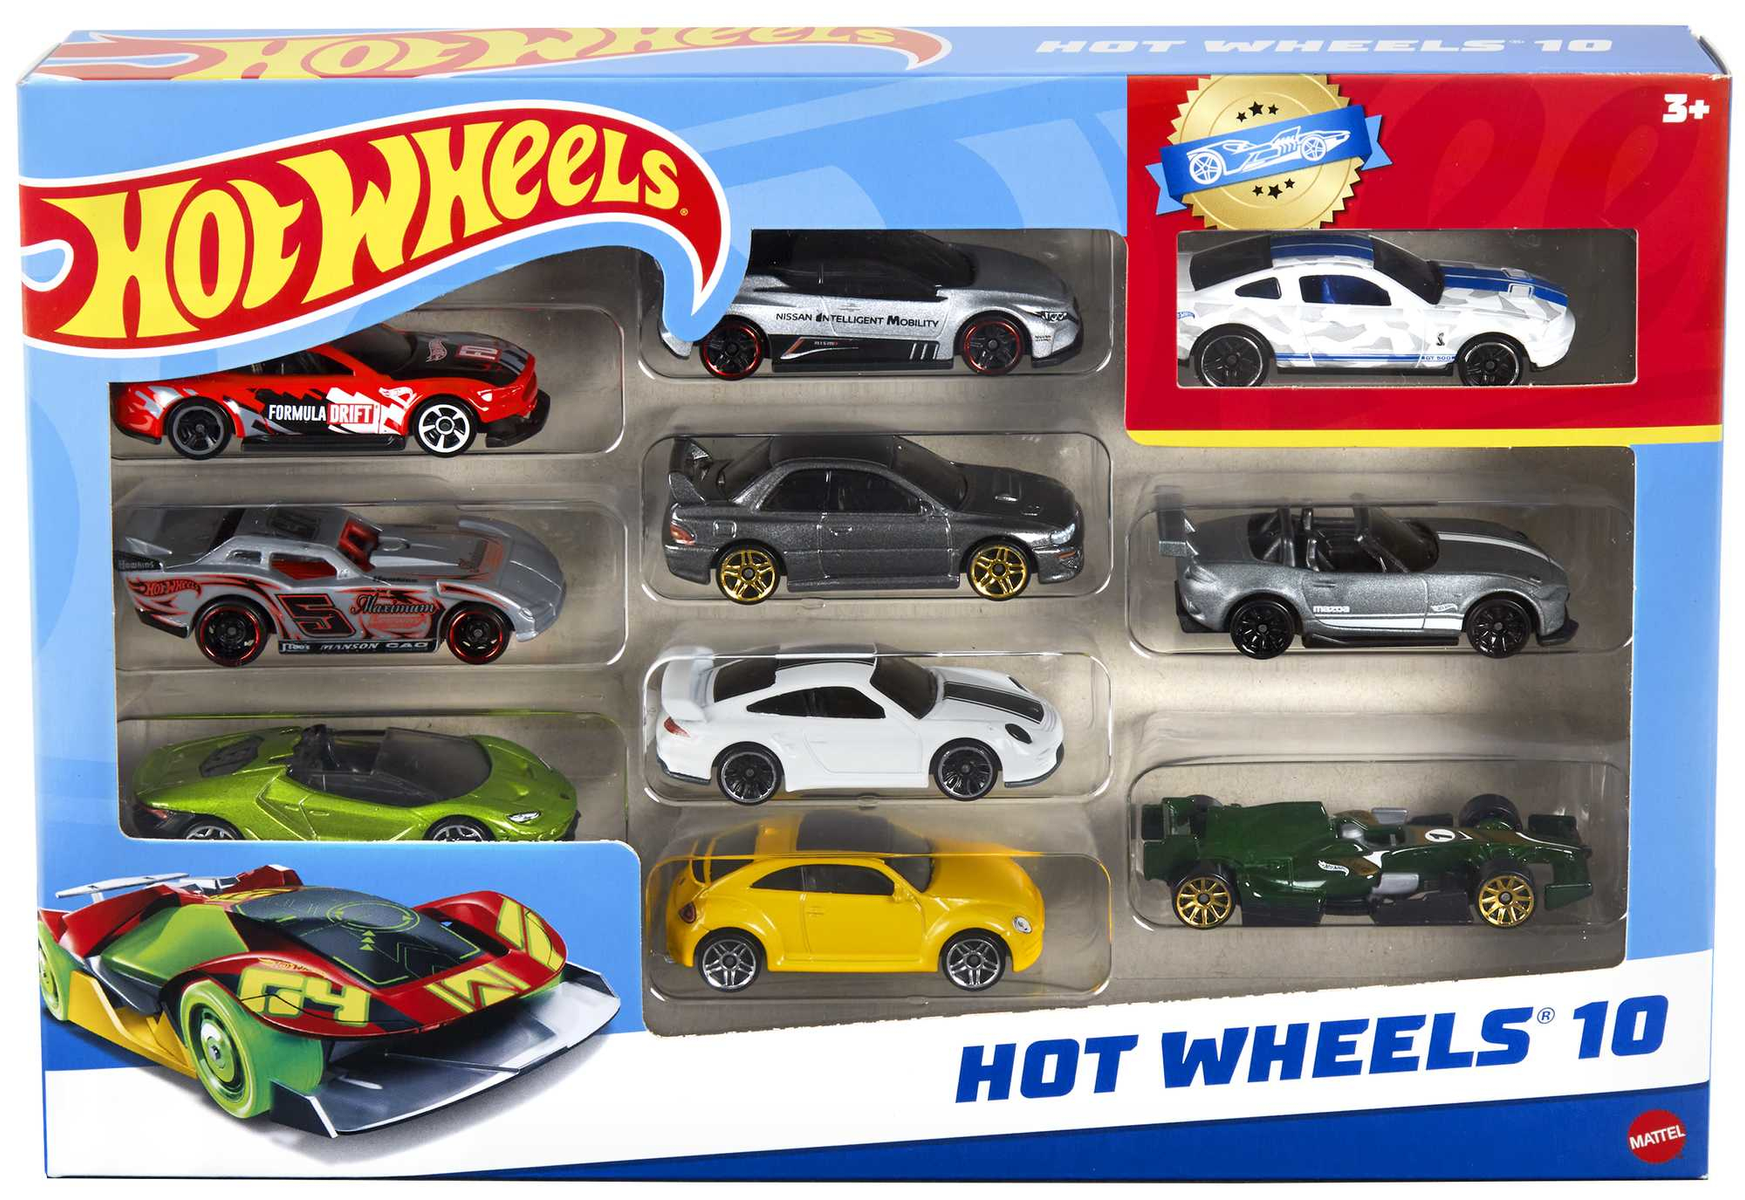 HOT WHEELS 412496 vehicle toy